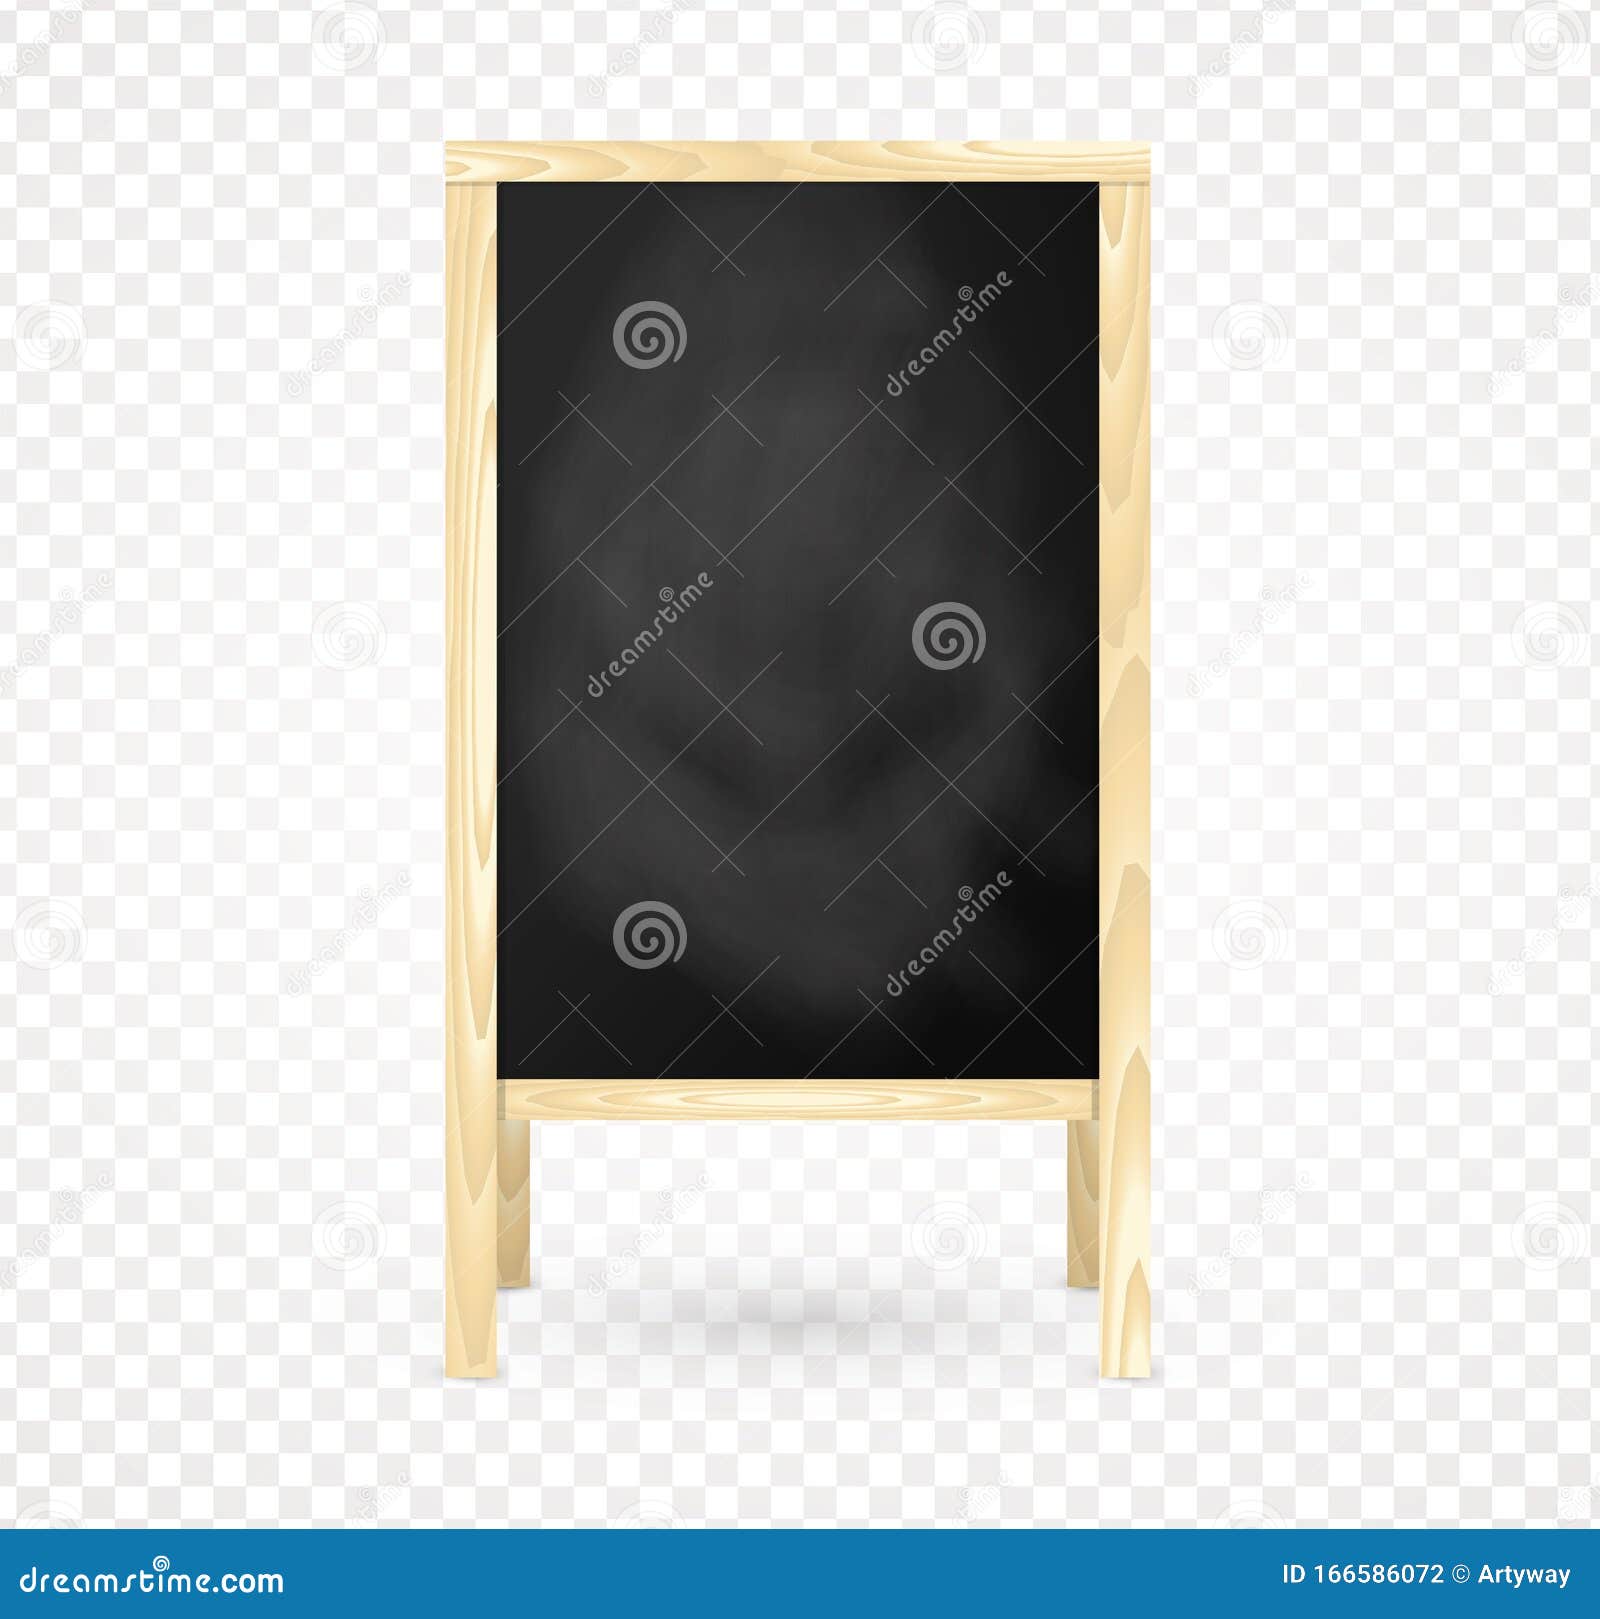 PUB SIGN WOODEN MENU BOARD RESTAURANT 39.5"x27,5" blackboard V+ CHALK BOARD 